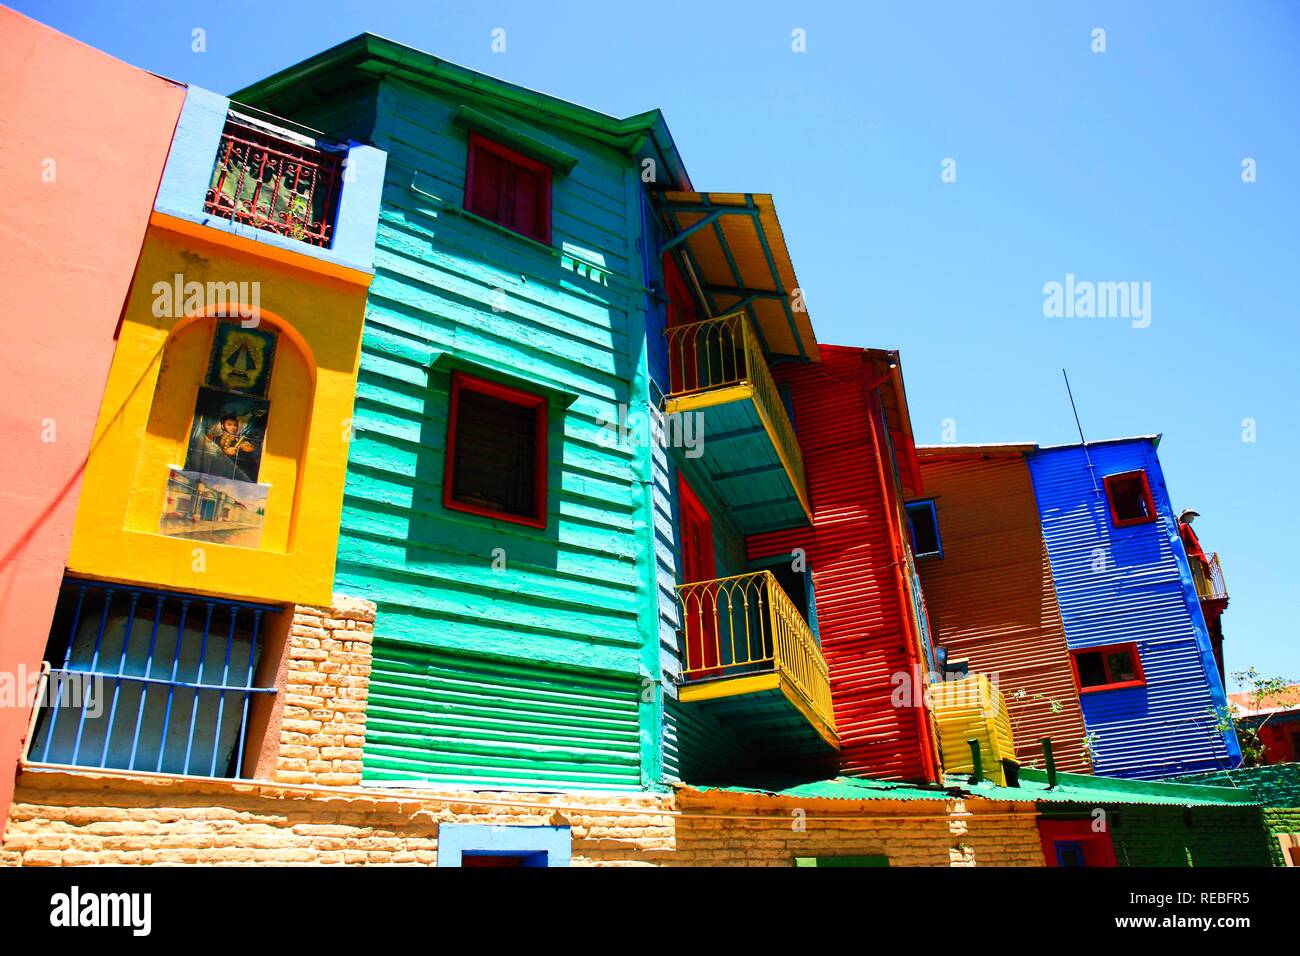 Colurful houses, corrogated iron facades, La Boca district, El Caminito, Buenos Aires, Argentina Stock Photo